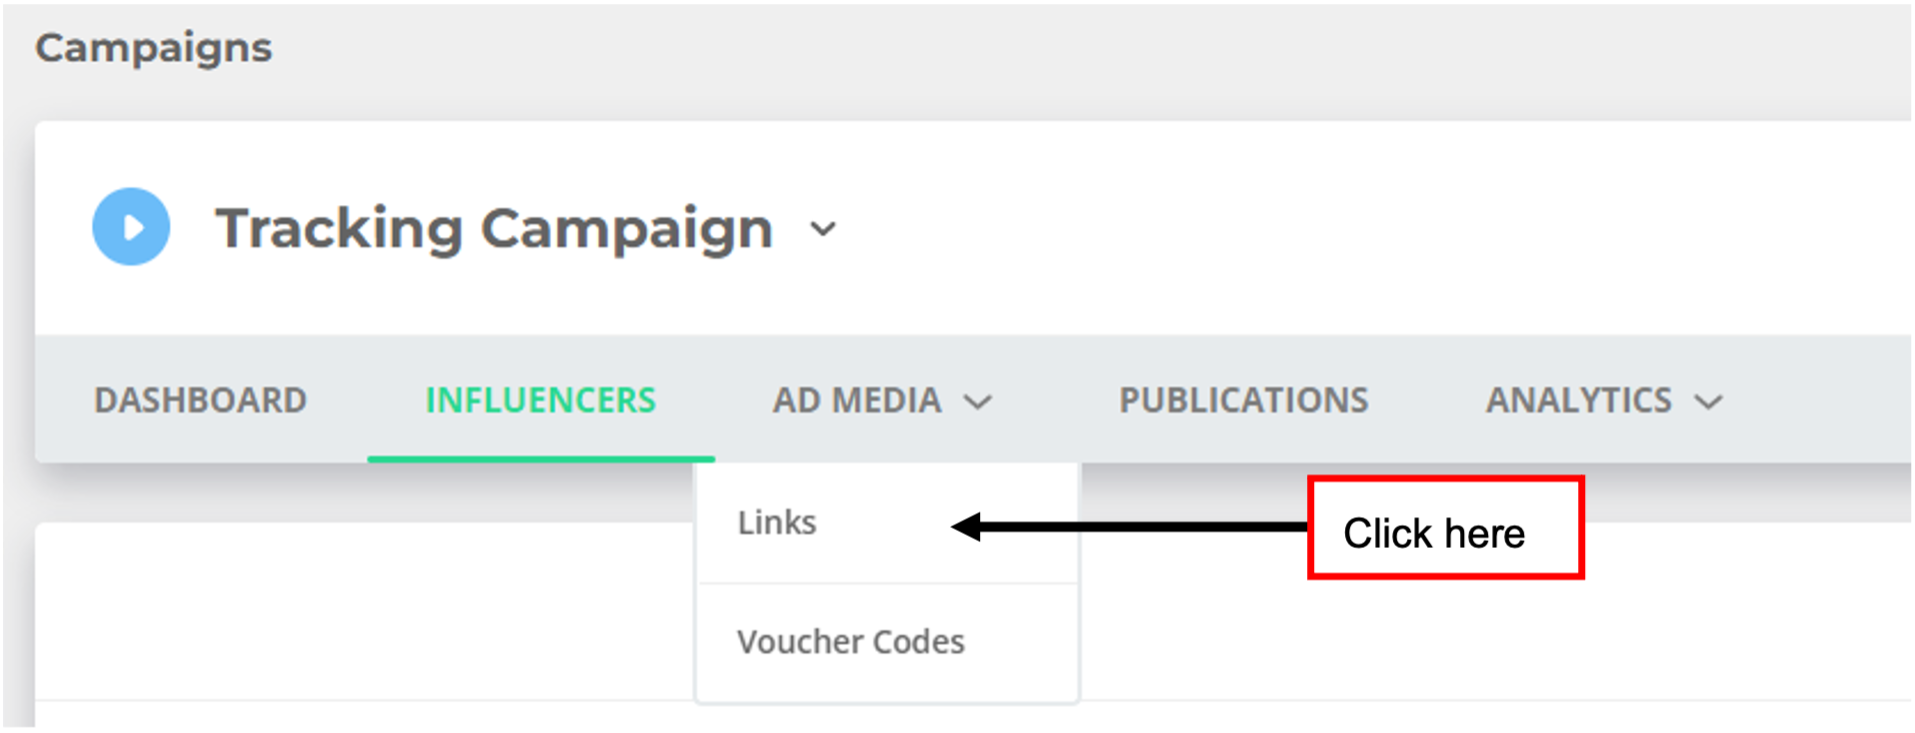 33: Campaigns - Ad Media: Links